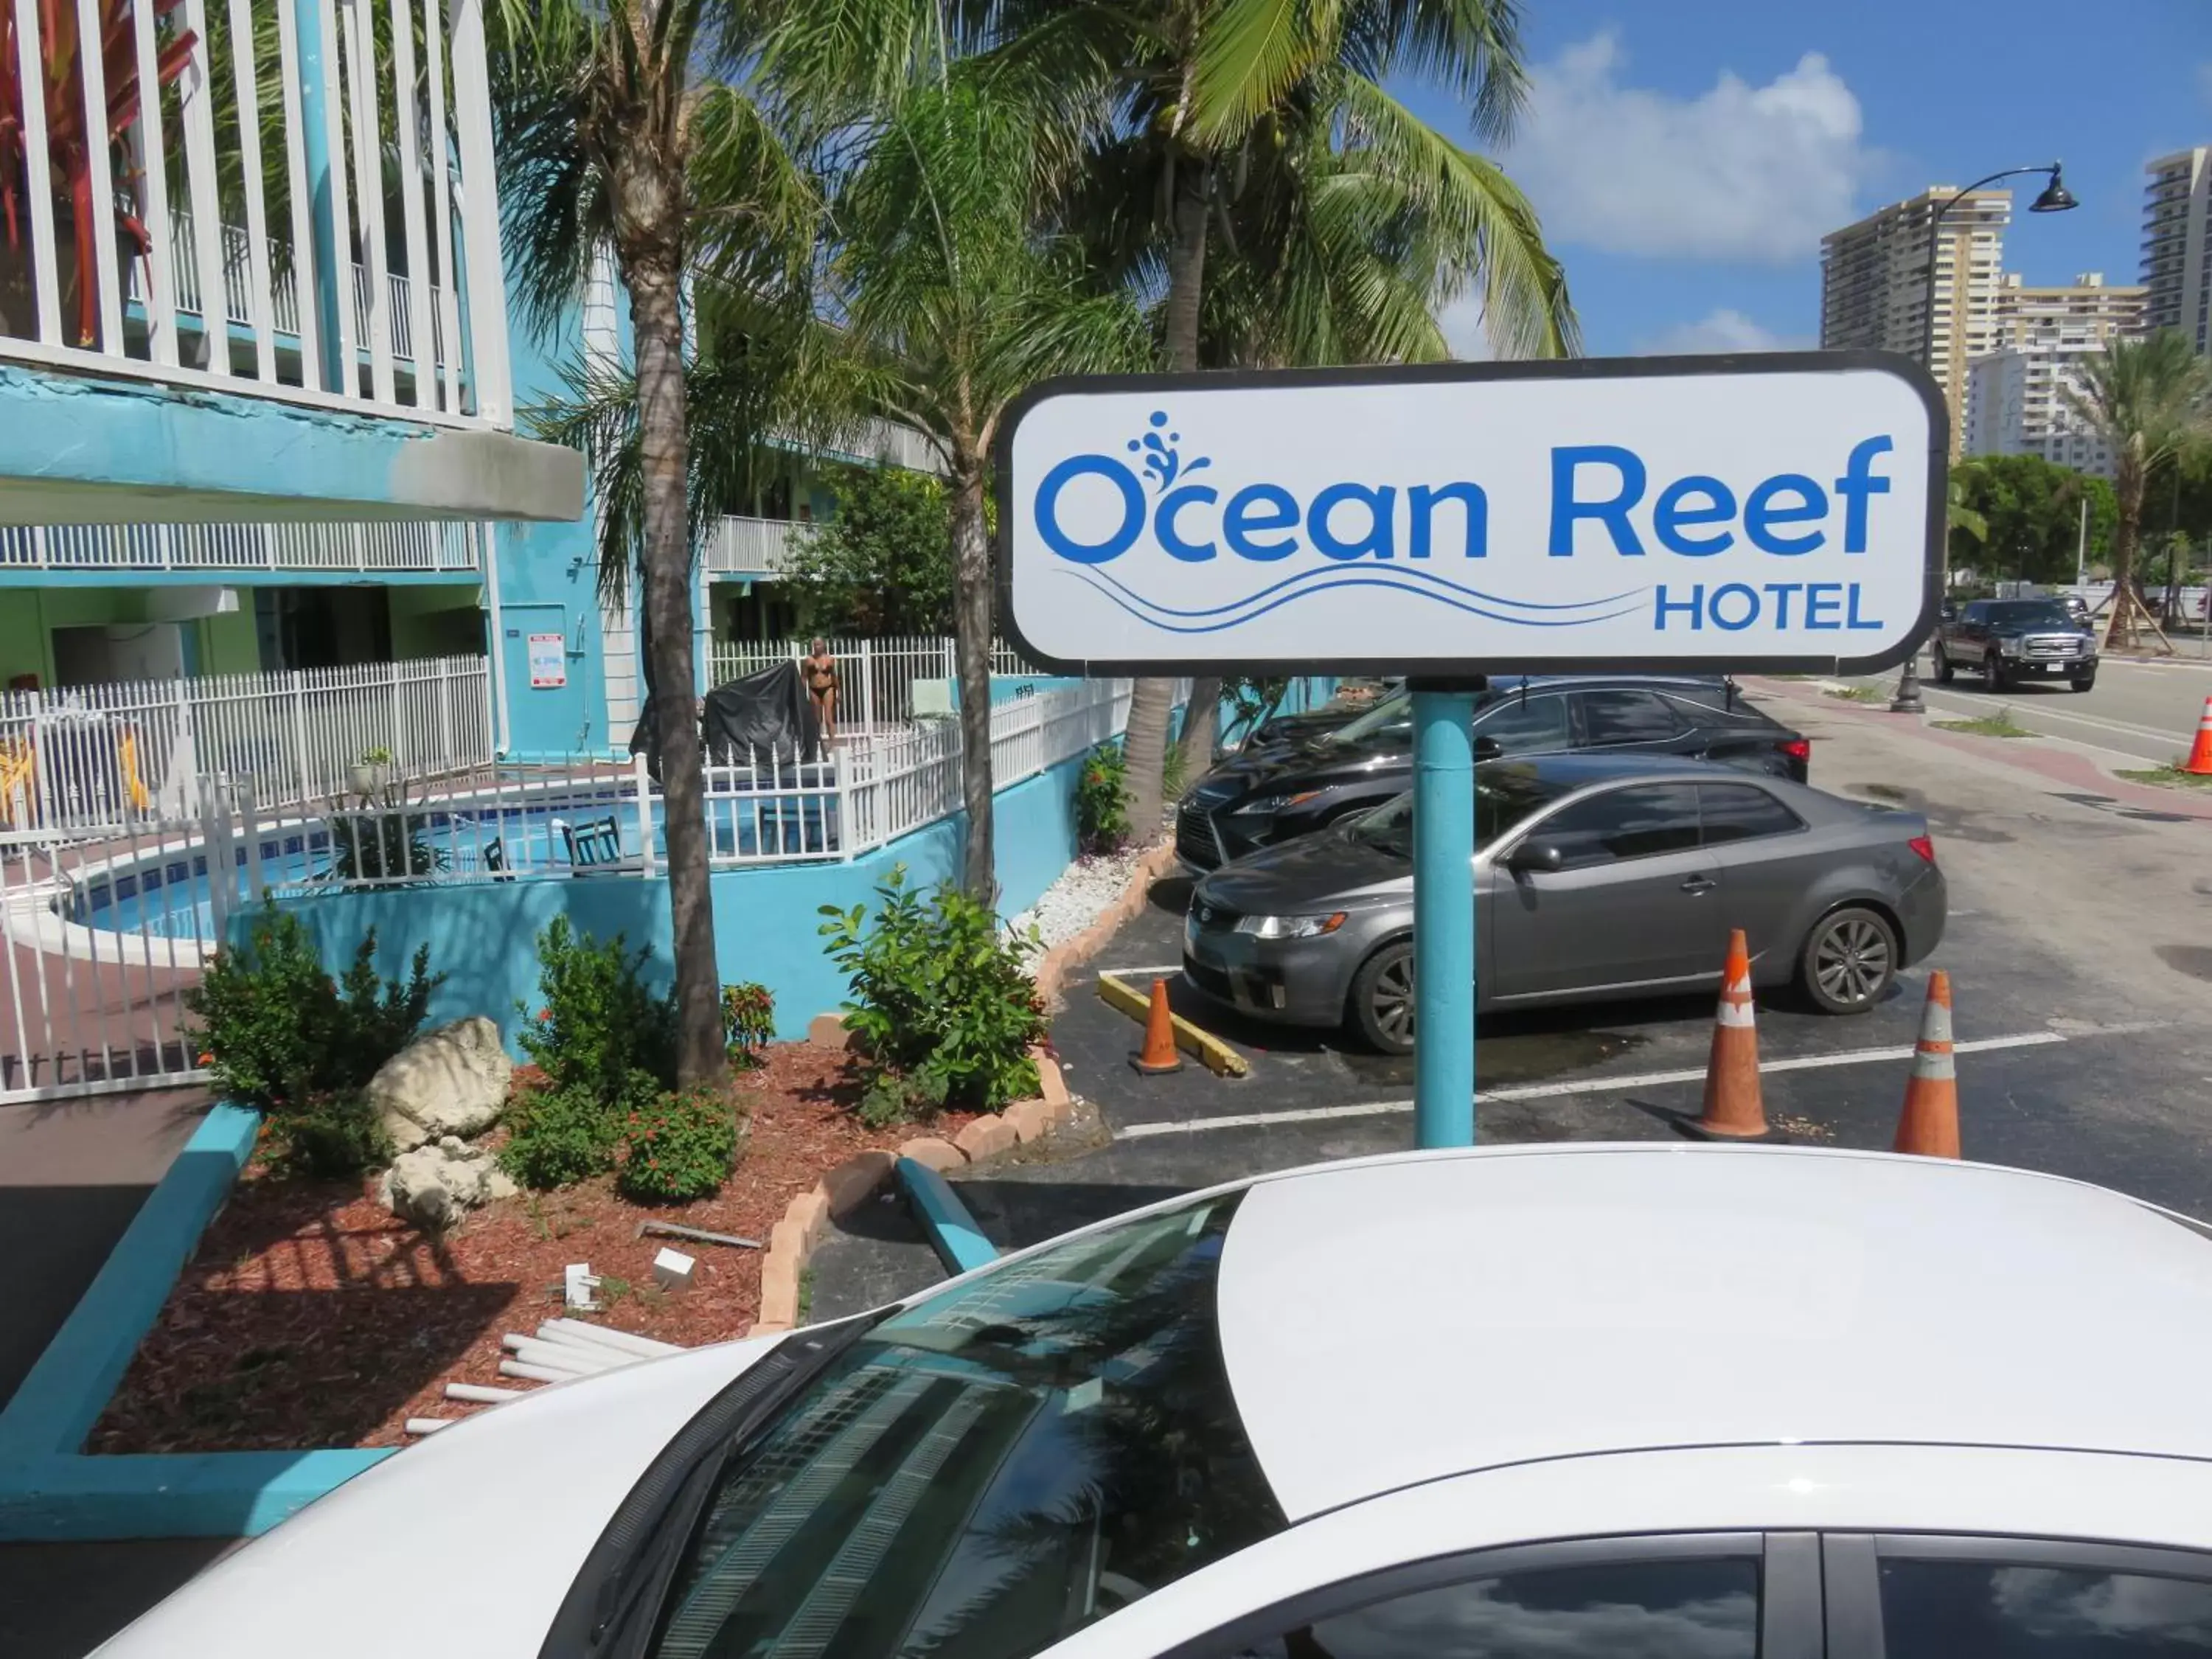 Property logo or sign in Ocean Reef Hotel